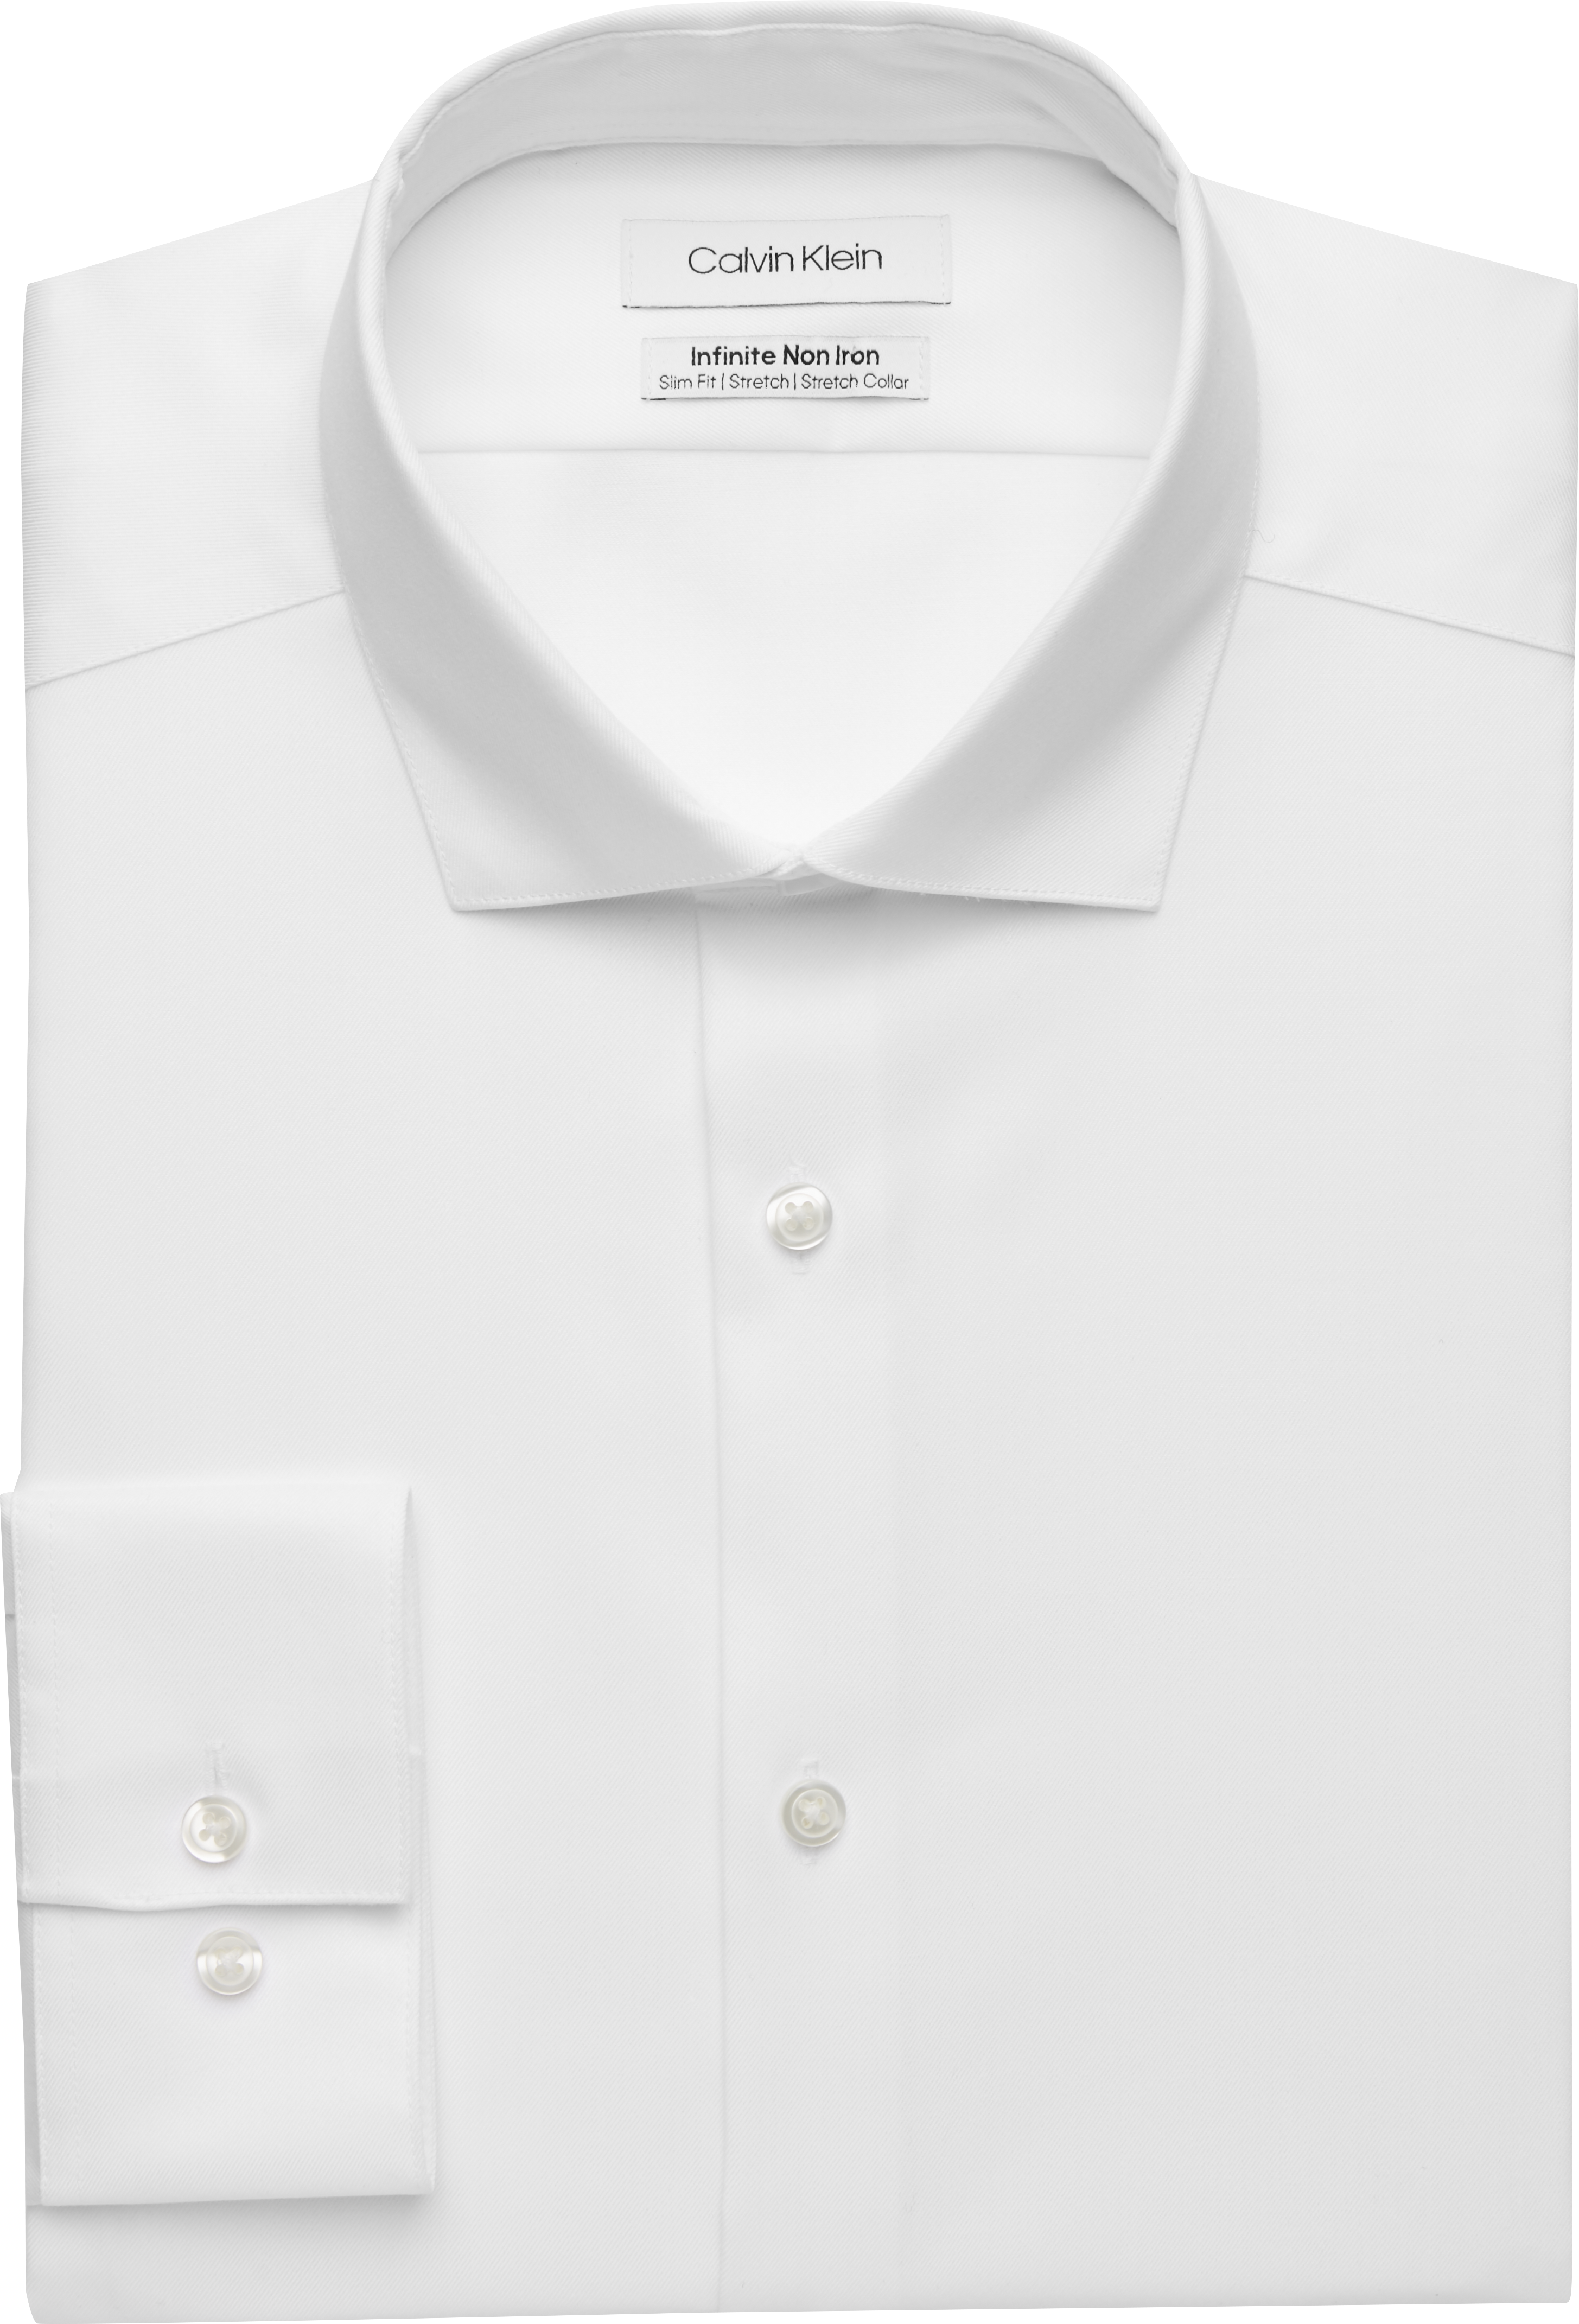 tweede doel proza Calvin Klein Infinite Non-Iron Slim Fit Stretch Collar Dress Shirt, White -  Men's Suits | Men's